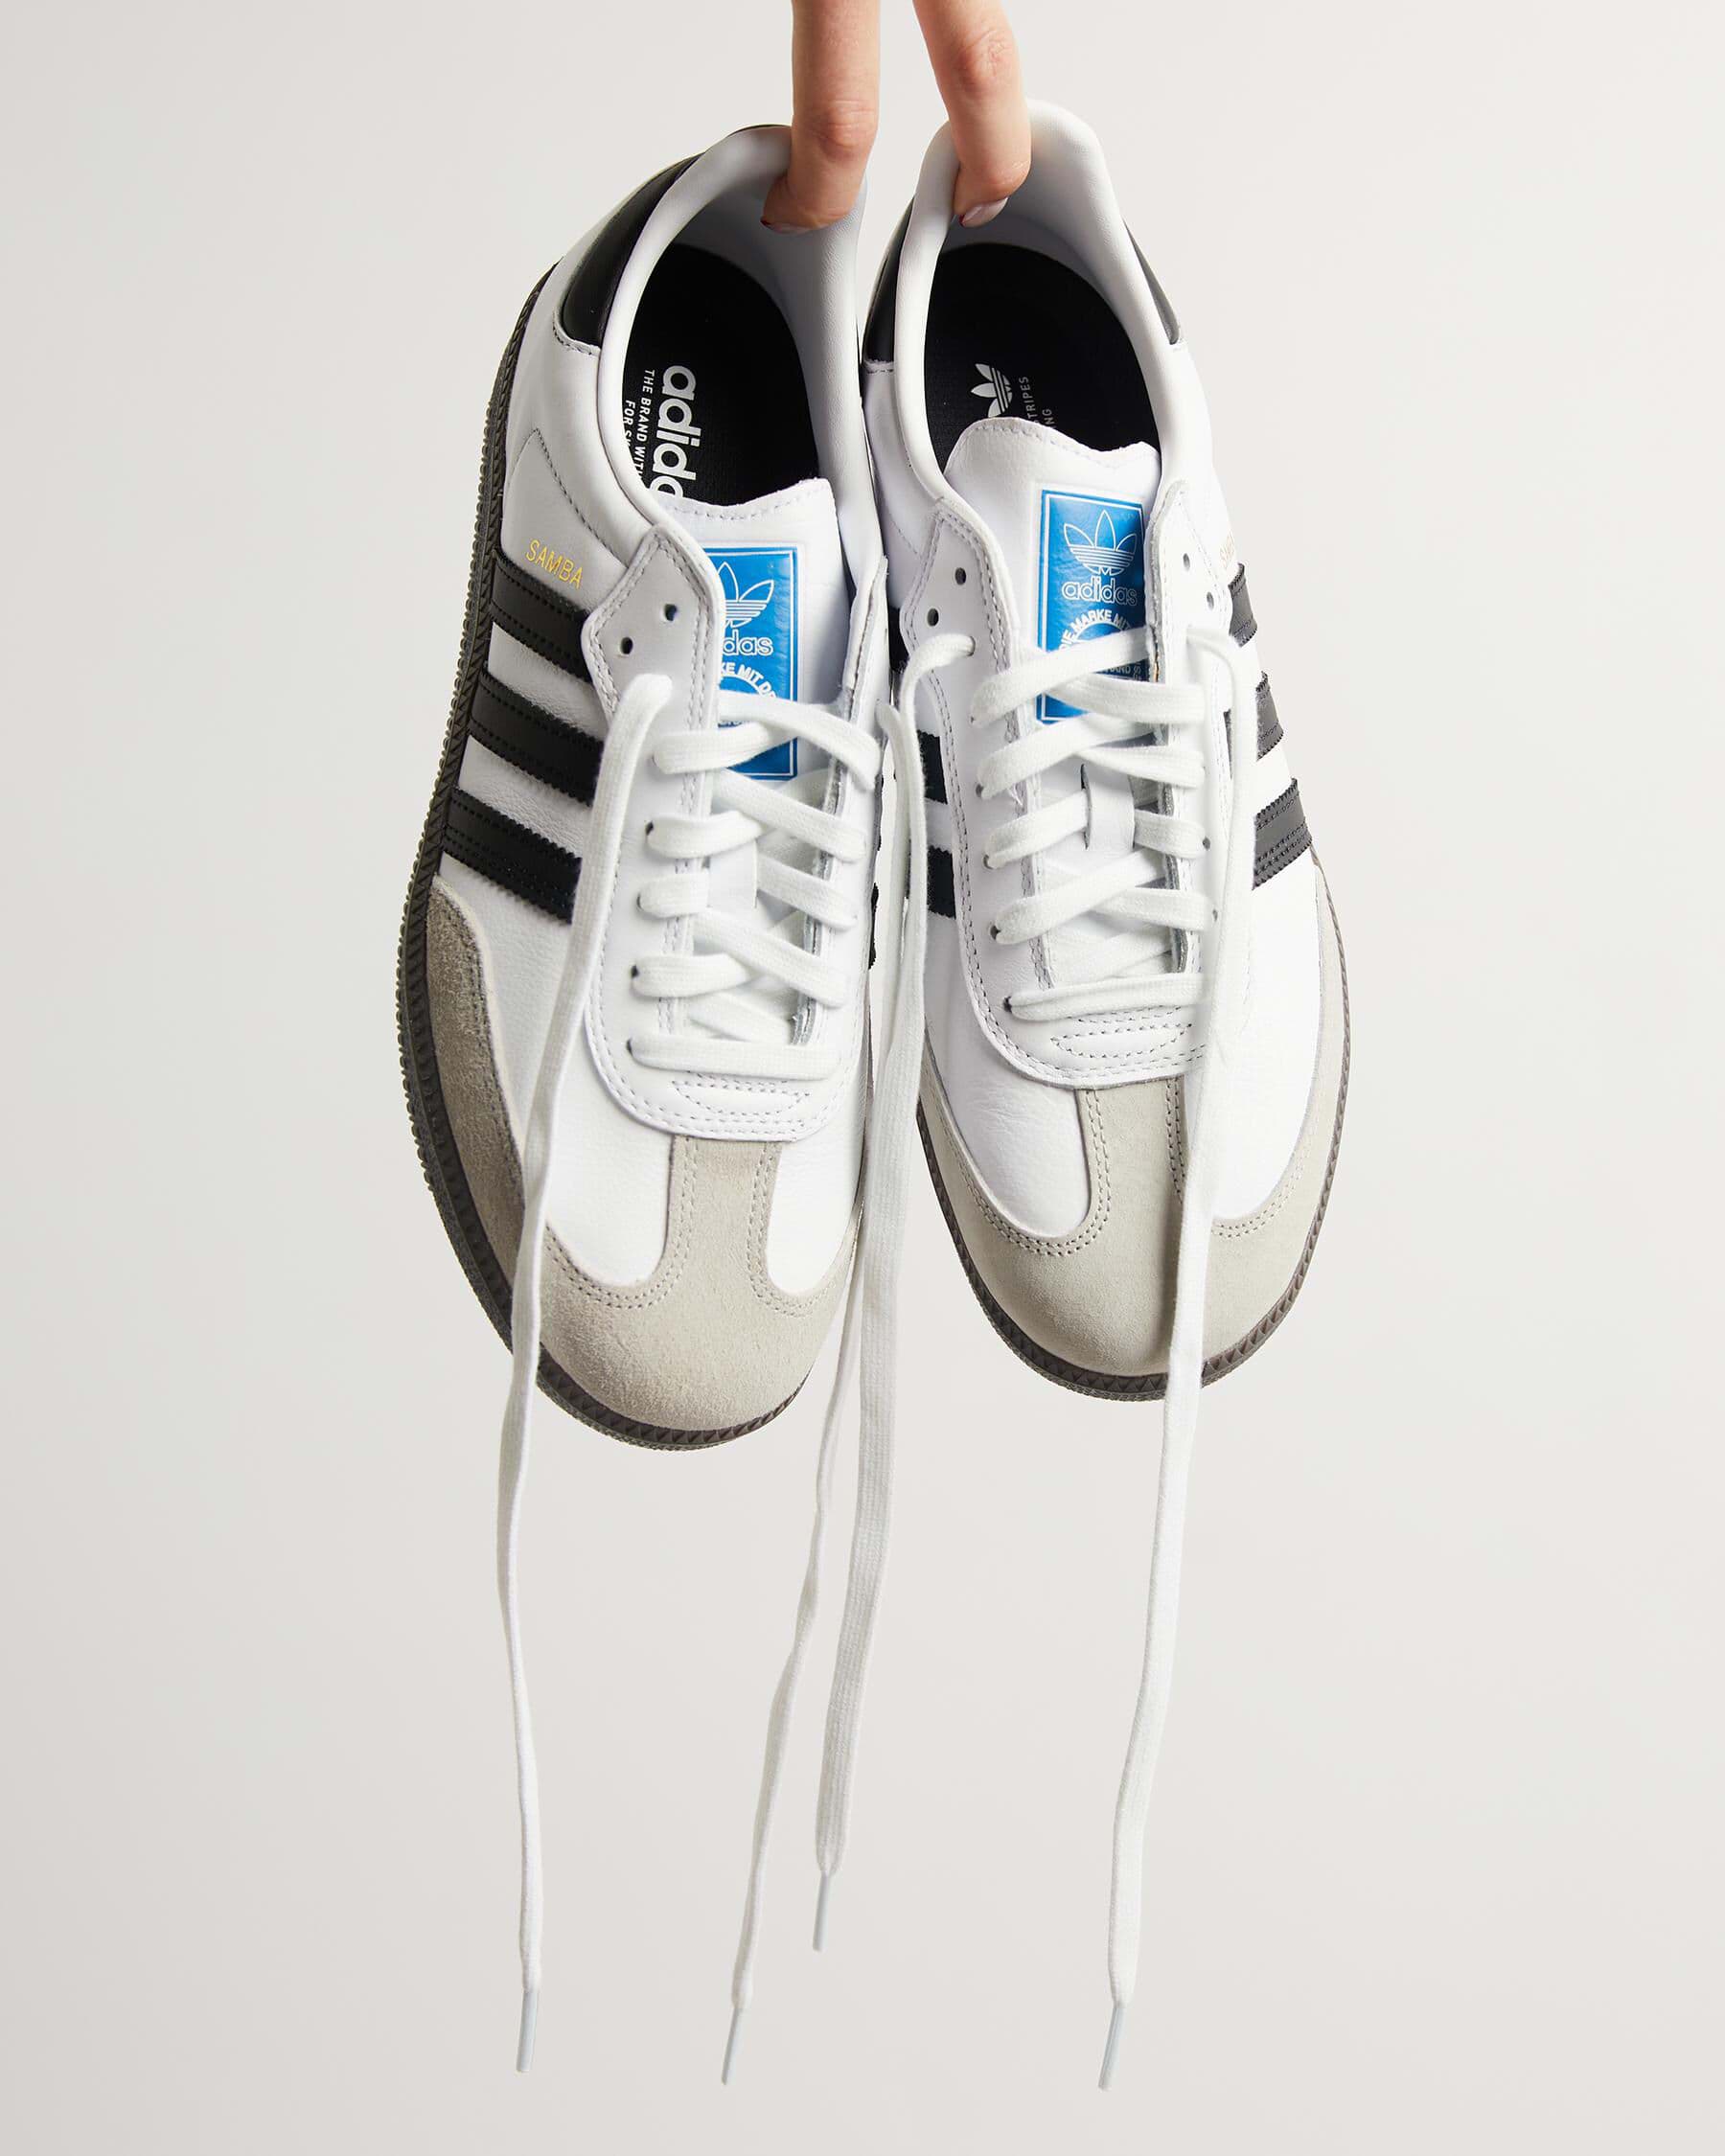 Adidas Samba ADV Shoes In White/core-black/gum - FREE* Shipping